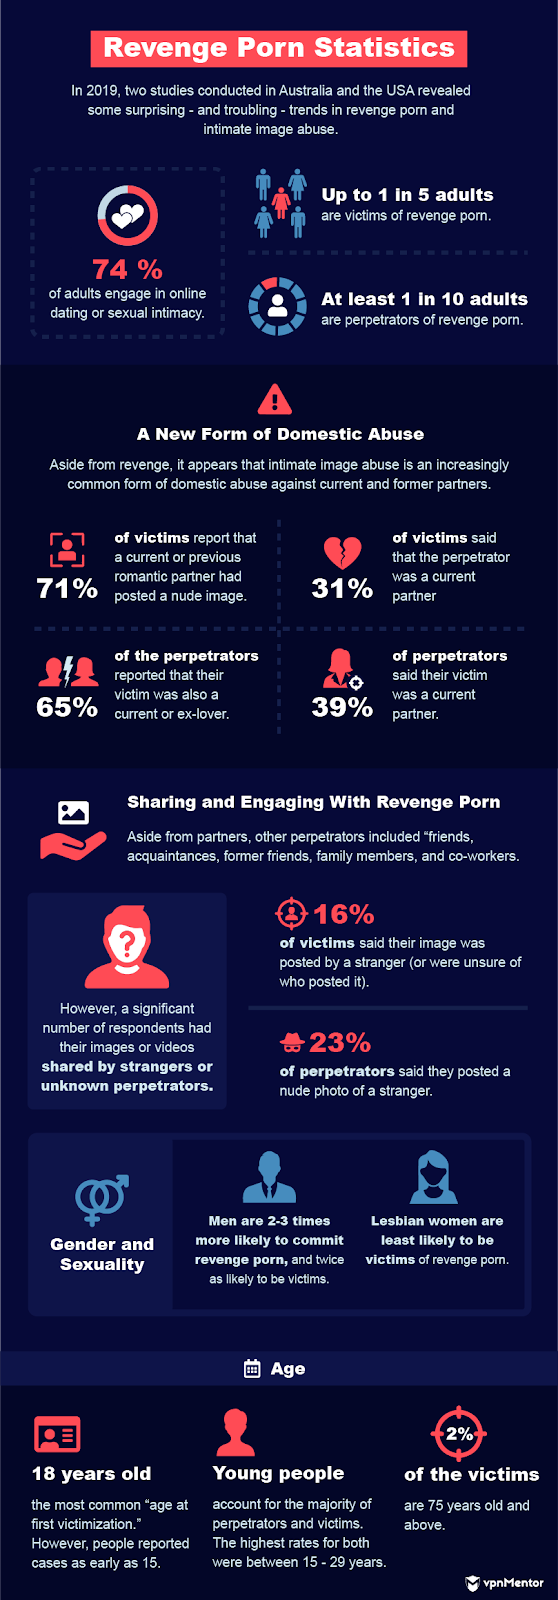 Group Revenge Porn - Revenge Porn: The Latest Research and Law Enforcement Efforts